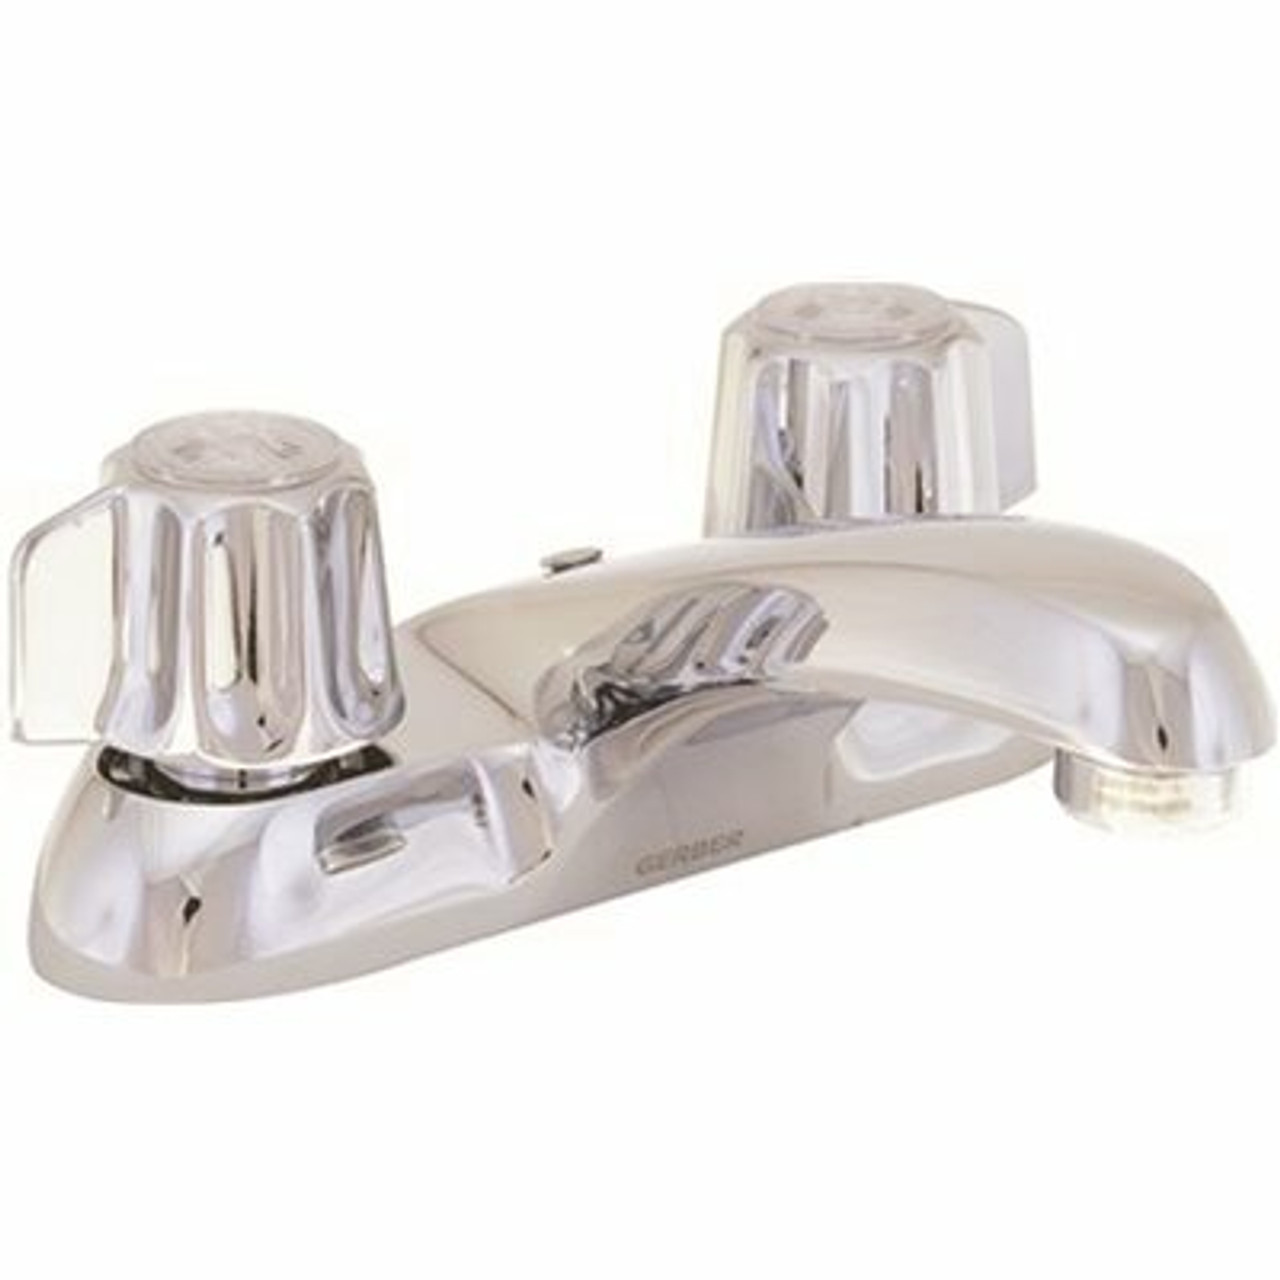 Gerber Plumbing Classic 4 In. Centerset 2-Handle Bathroom Faucet In Chrome